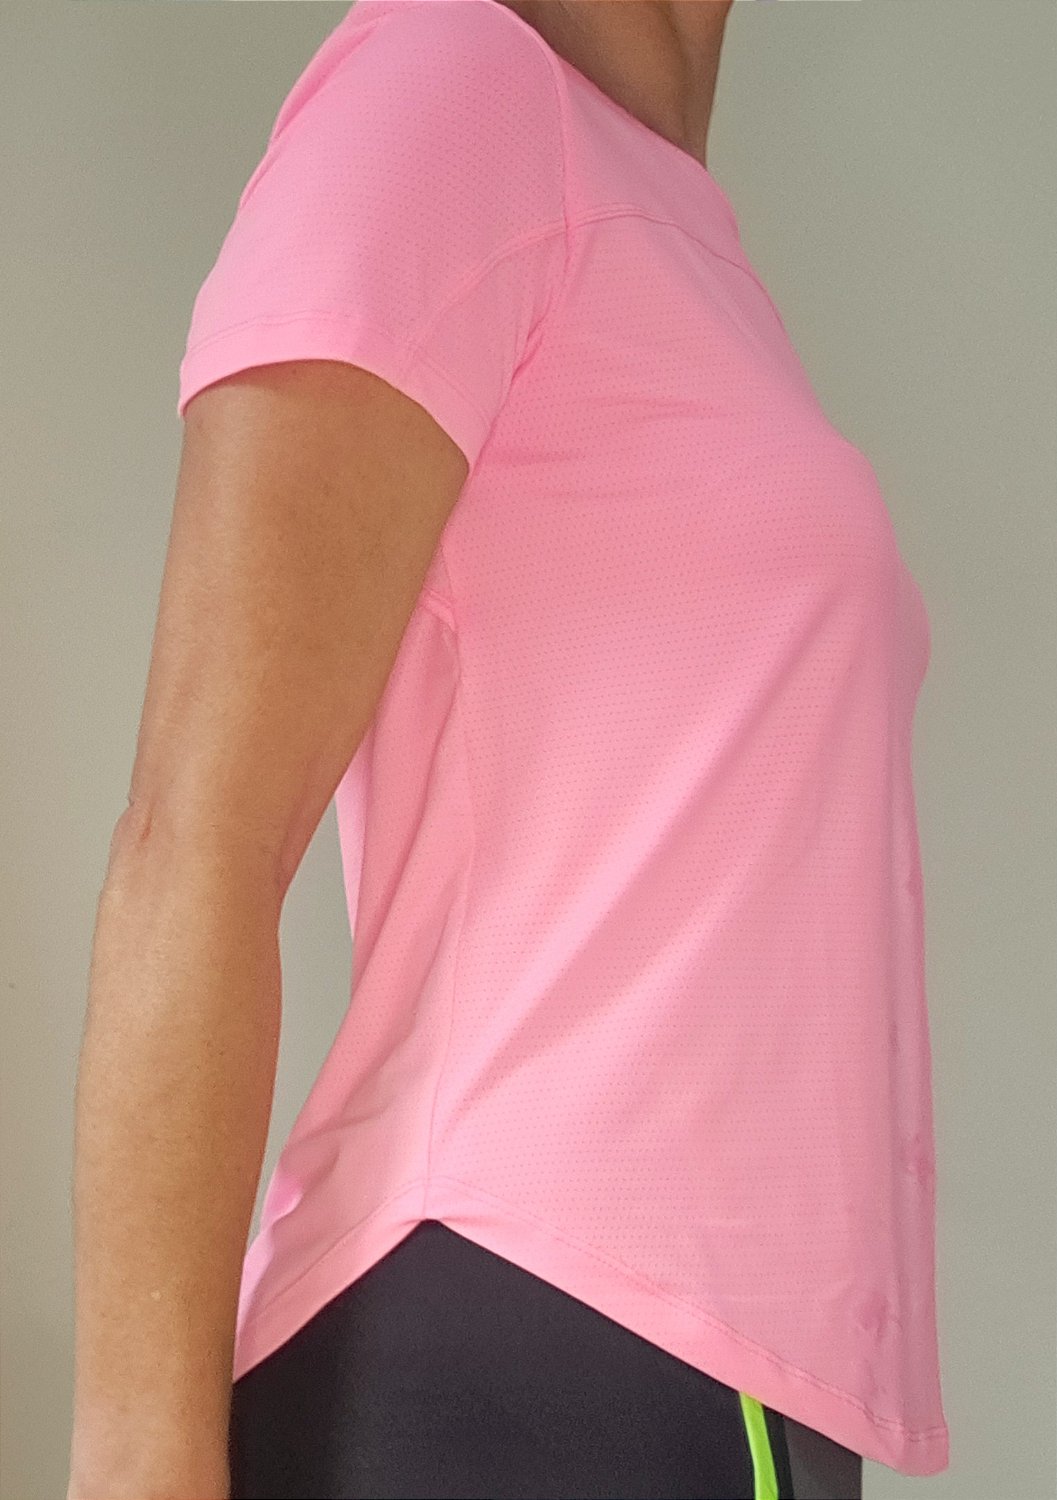 Moda Plenitude Fitness Casual  Camiseta Run Compression Rosa Choque - Moda  Plenitude Fitness Casual